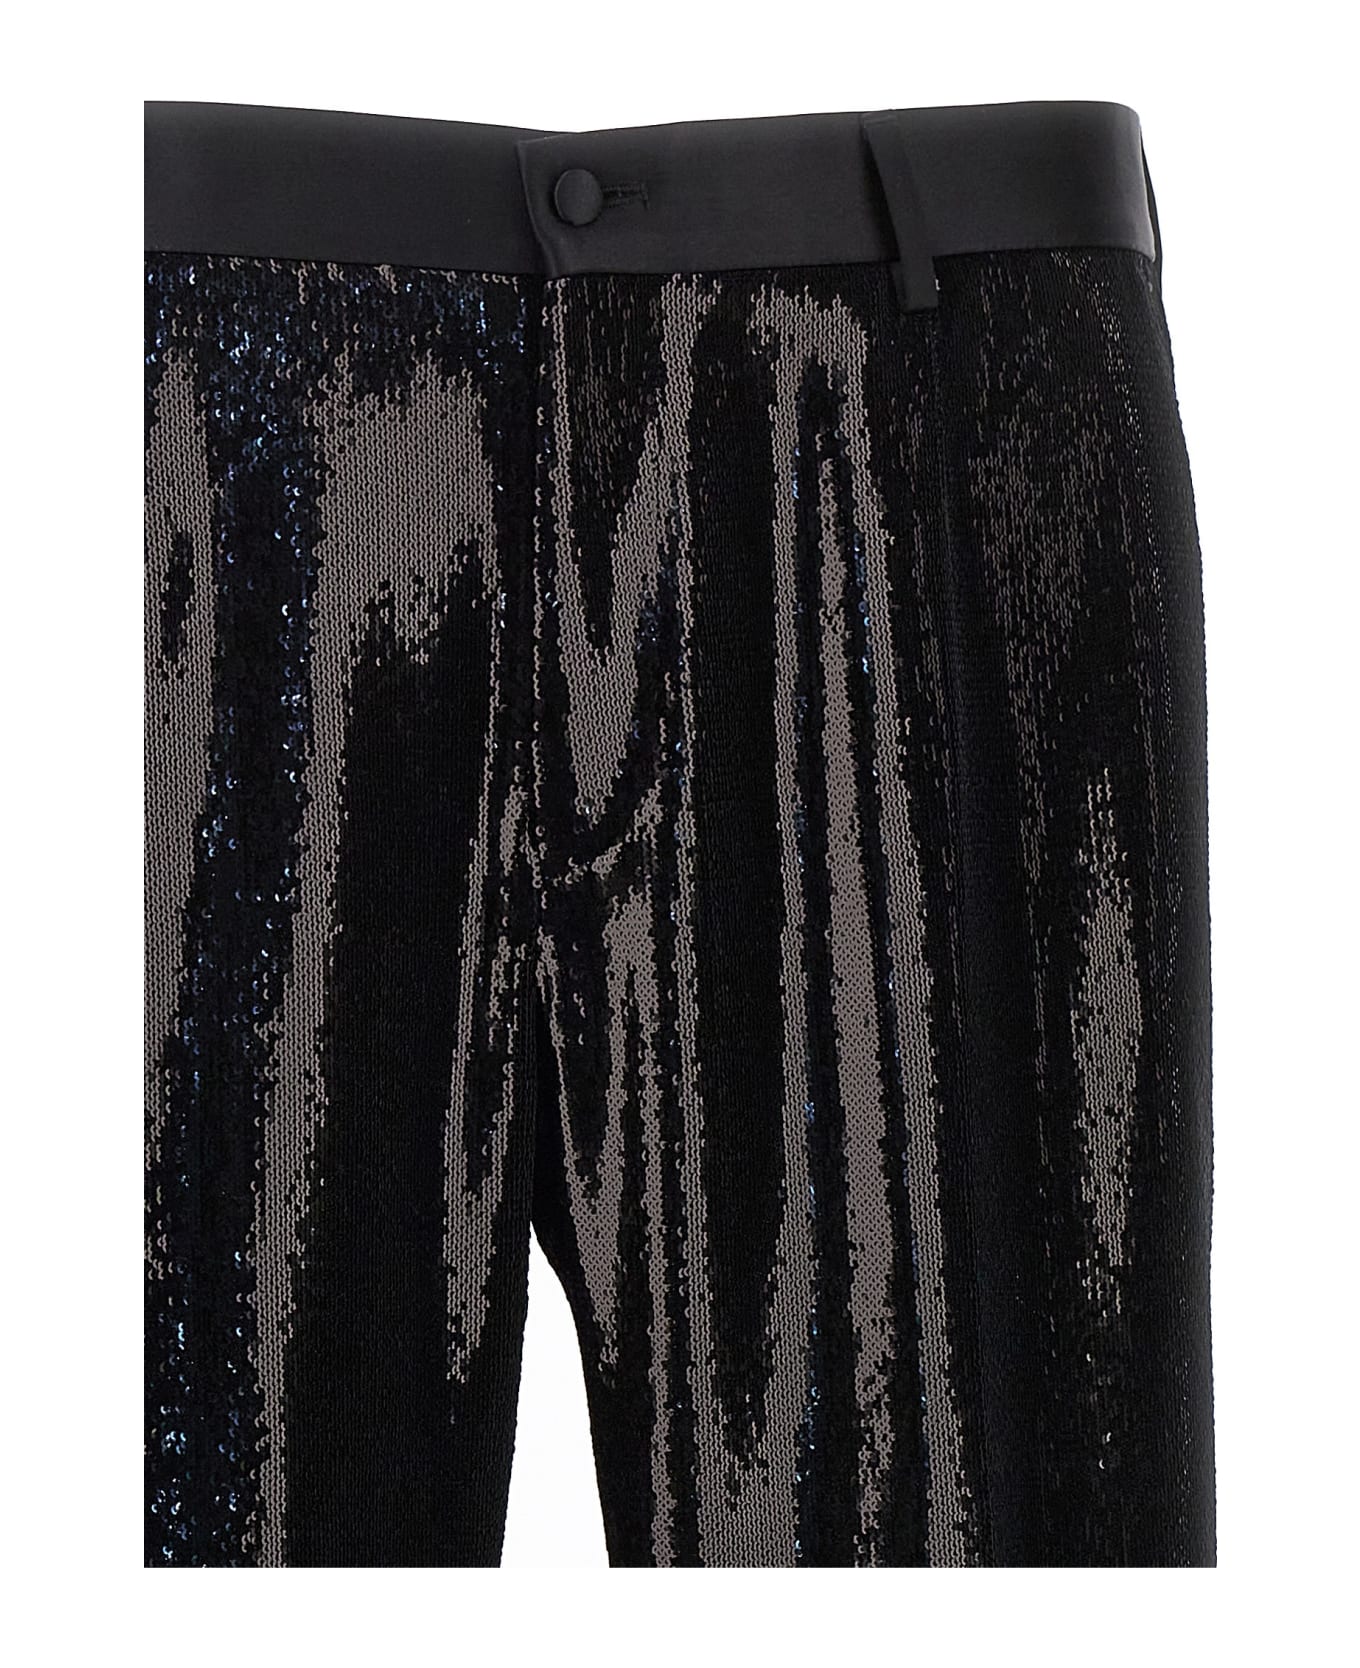 Dolce & Gabbana Sequin Pants - N0000